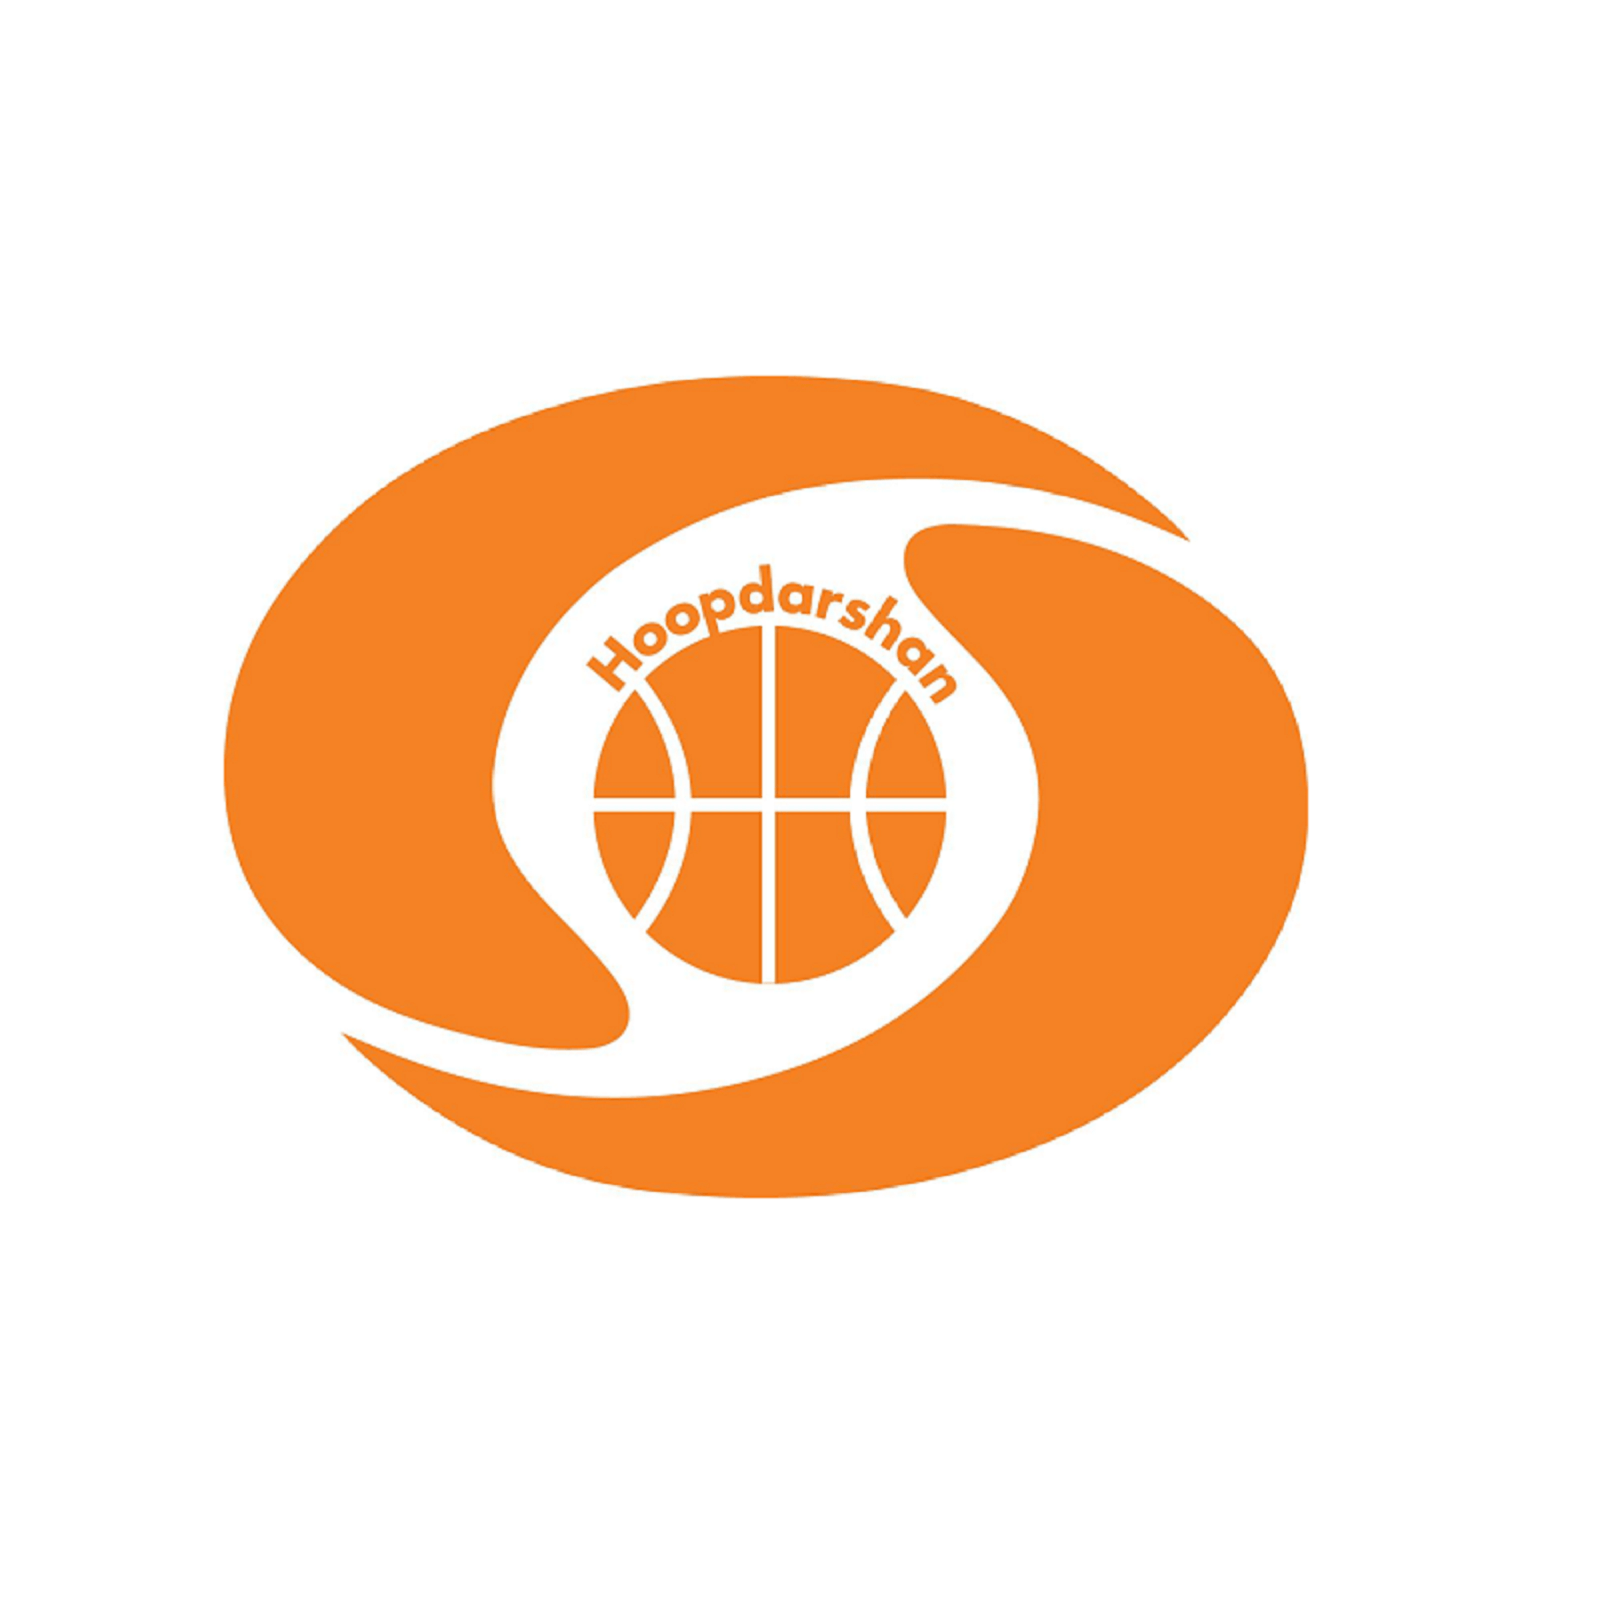 Crane Orange Circle Logo - Hoopdarshan Episode 36: State of the UBA Basketball League with Paul ...